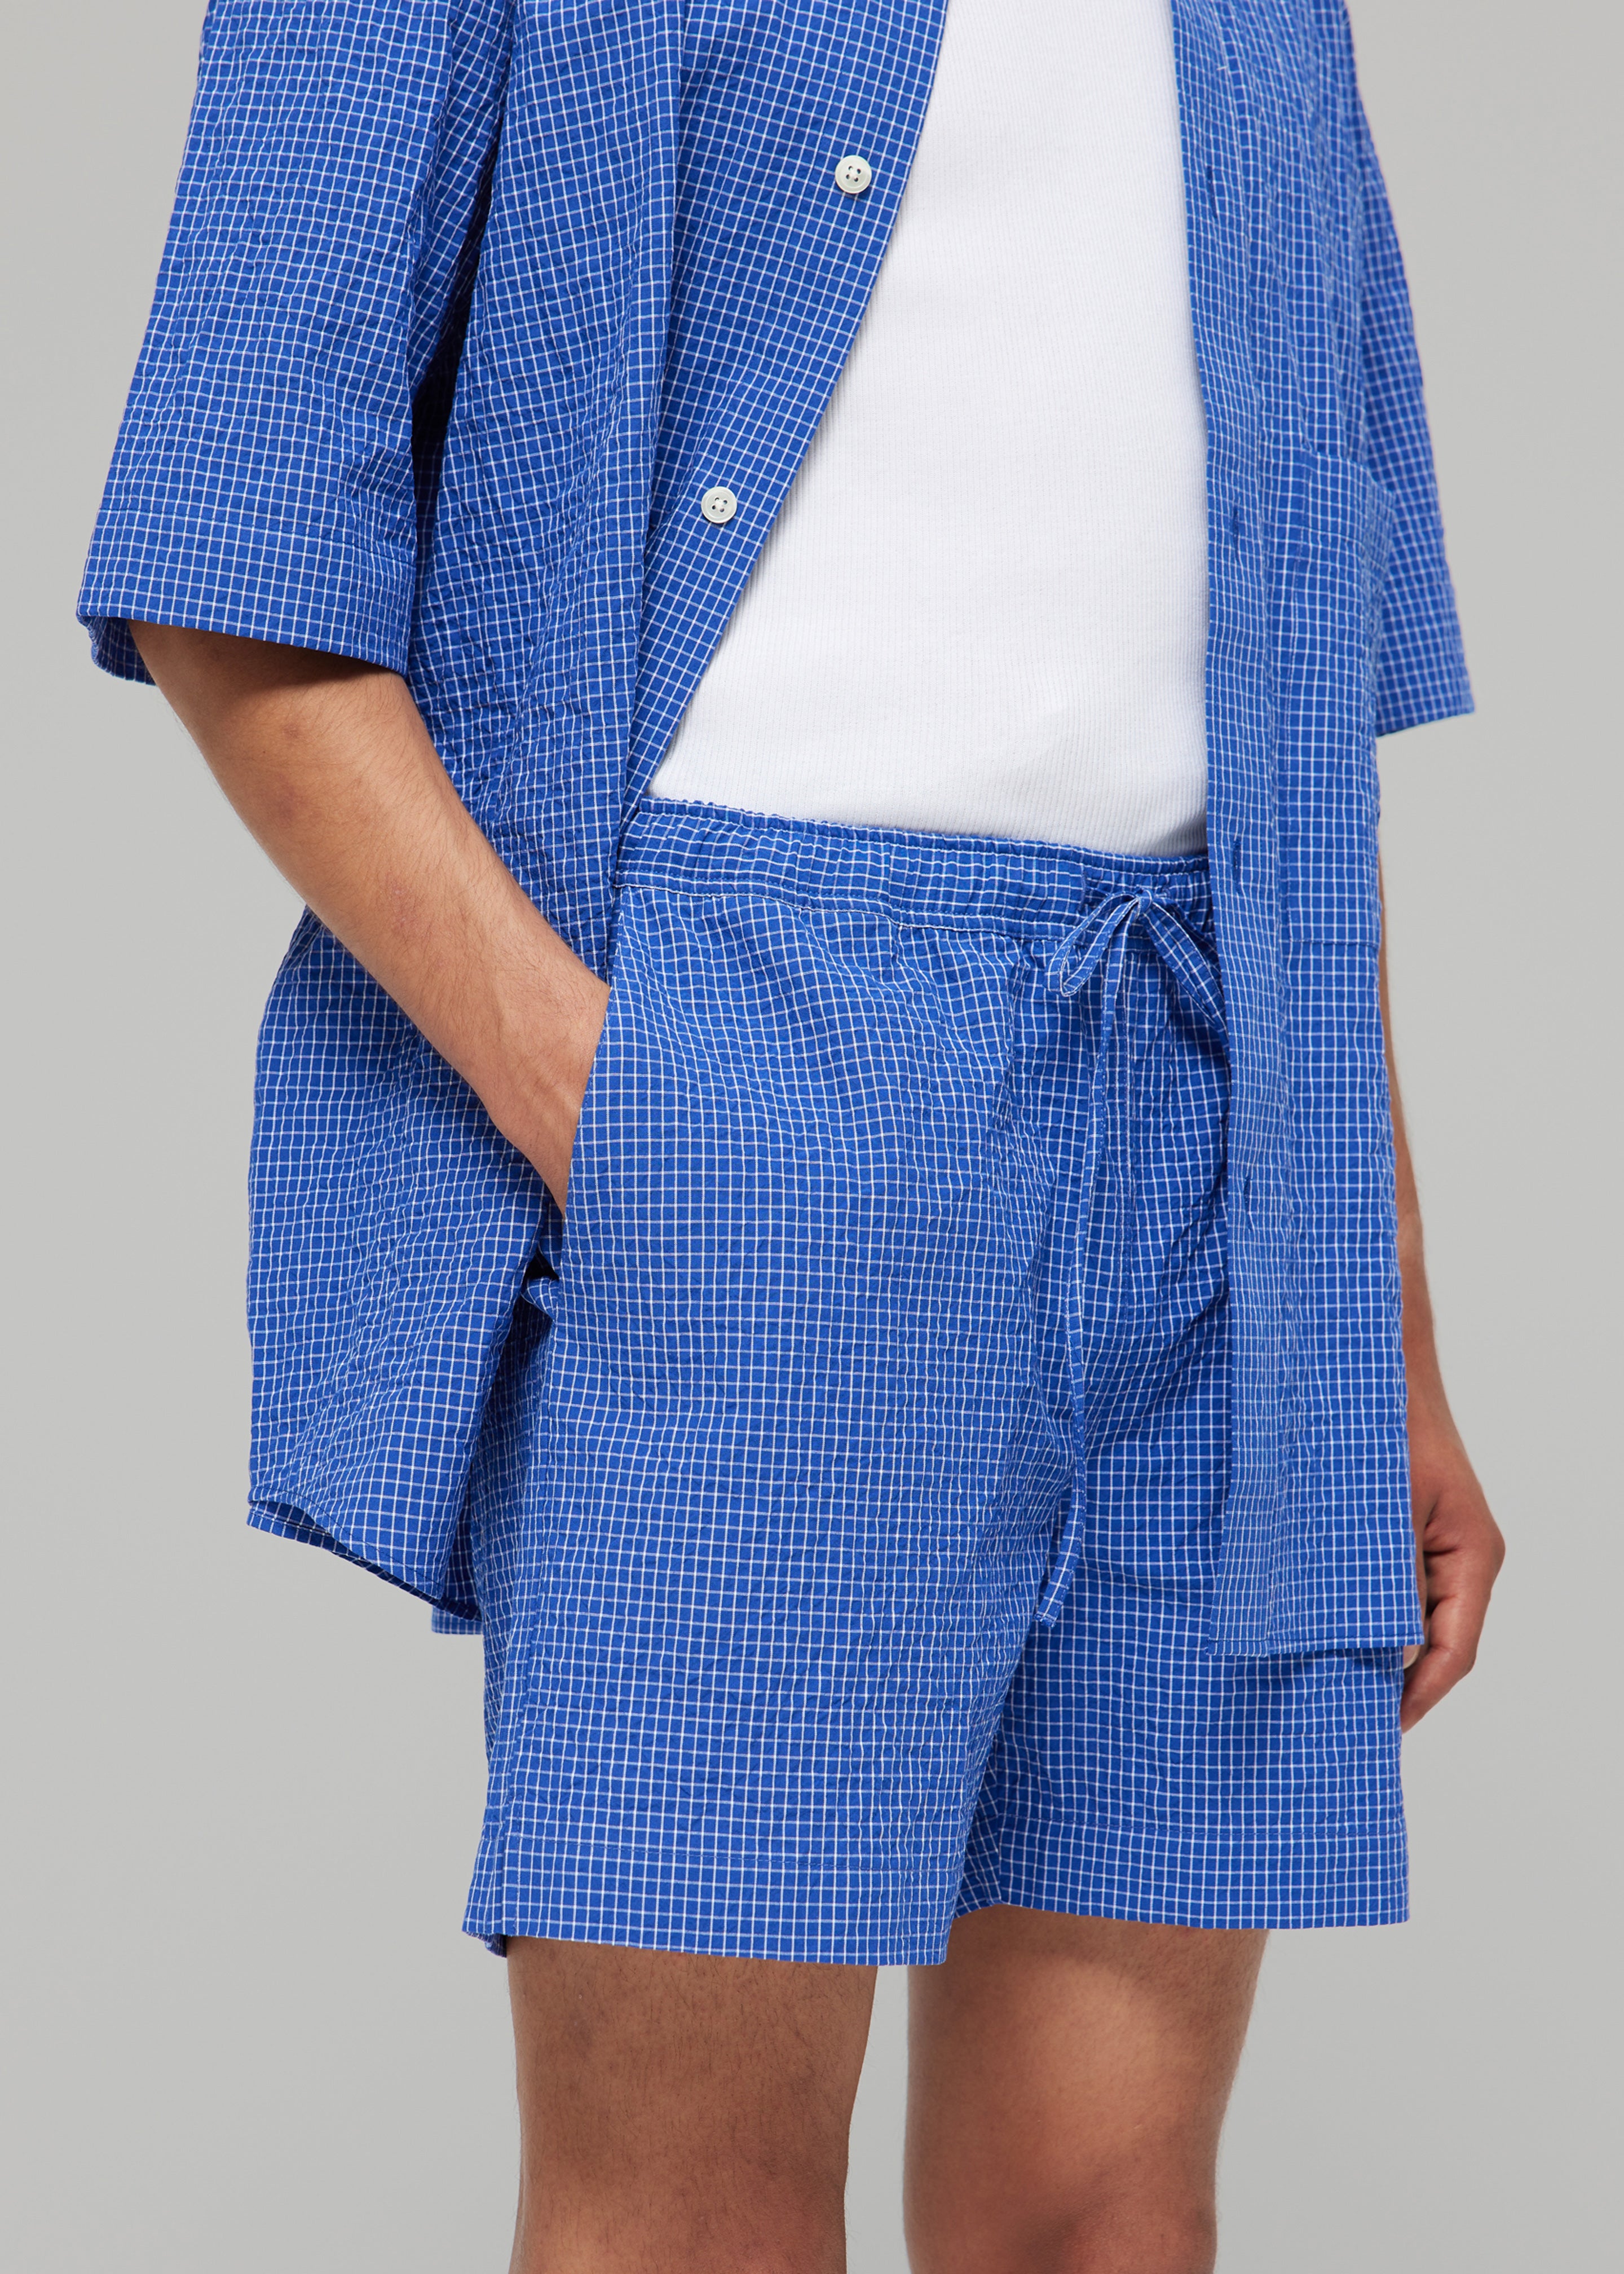 Róhe Checkered Shorts - Ultramarine White Check - 2